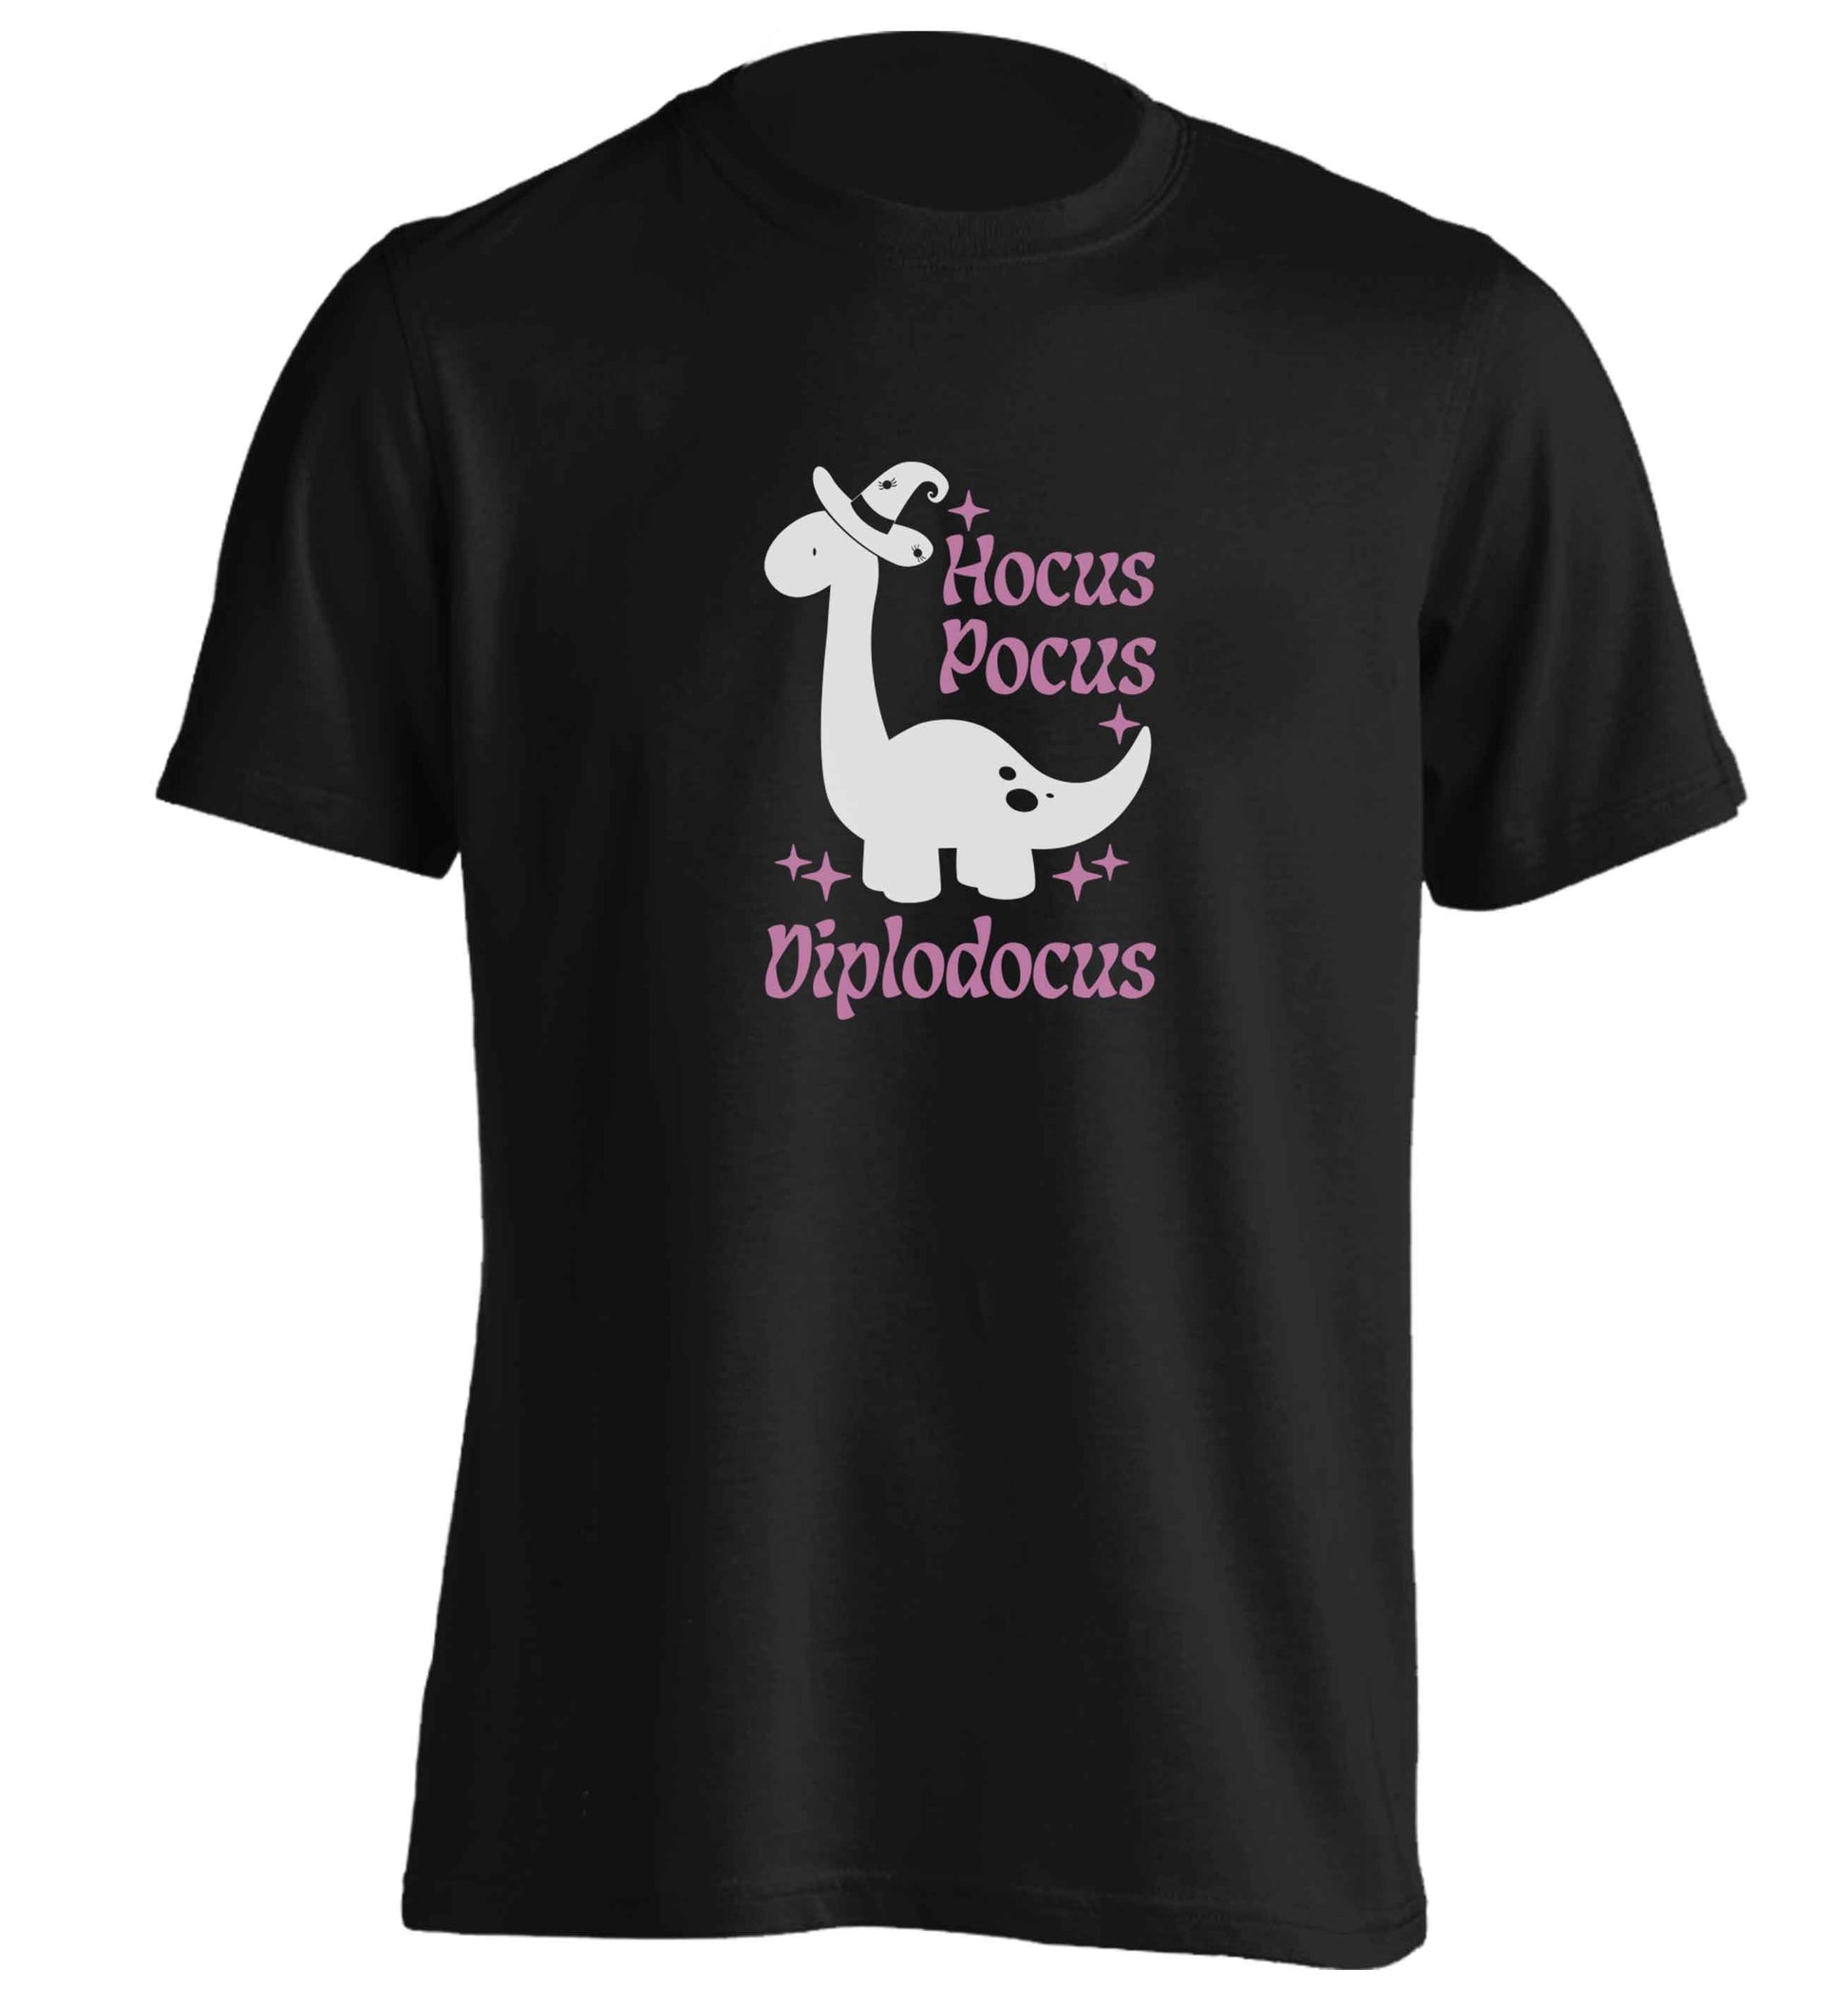 Hocus pocus diplodocus Kit adults unisex black Tshirt 2XL